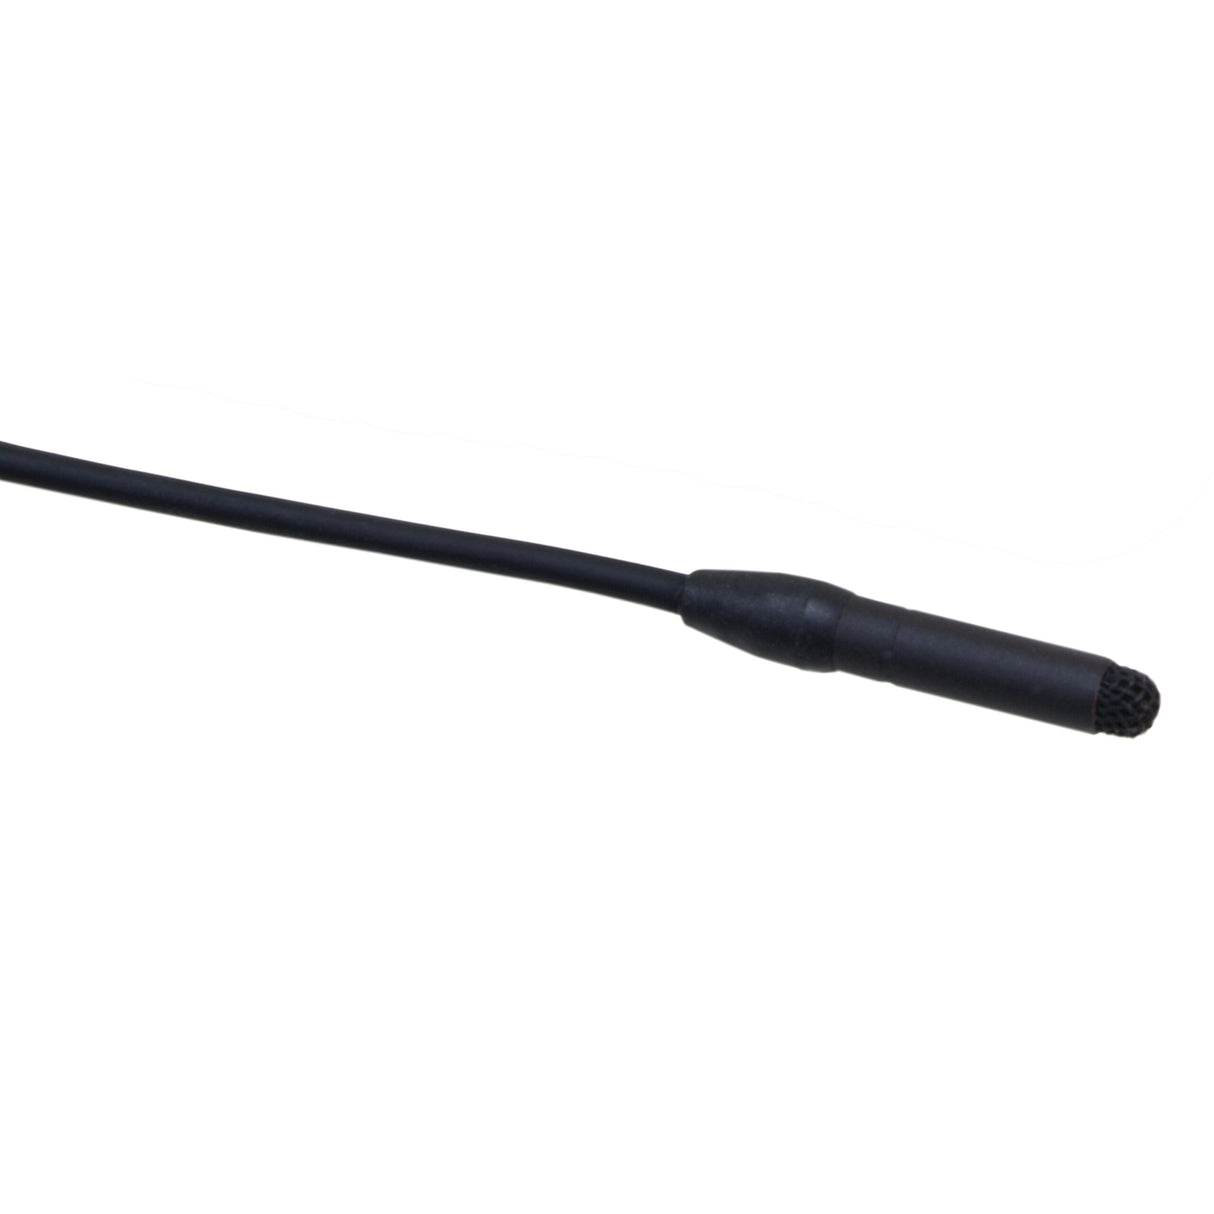 Sanken COS-11D-PT-RM-3.0-BK Omnidirectional Lavalier Microphone, Black, Pigtail, Reduced Sensitivity, 3m Stripped Cable